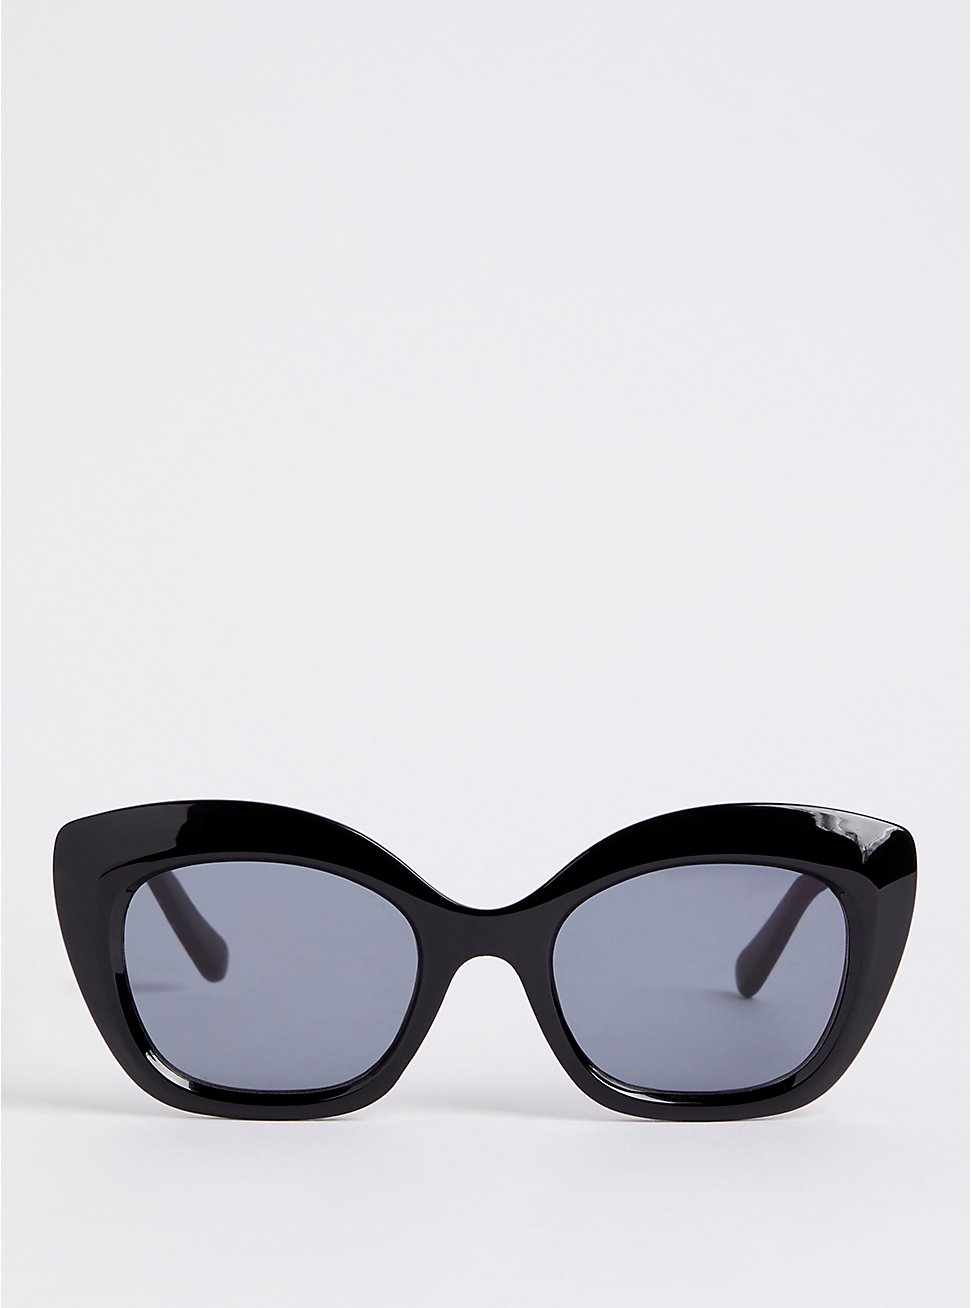 Plus Size Cat Eye Sunglasses - Black with Smoke Lens, , hi-res